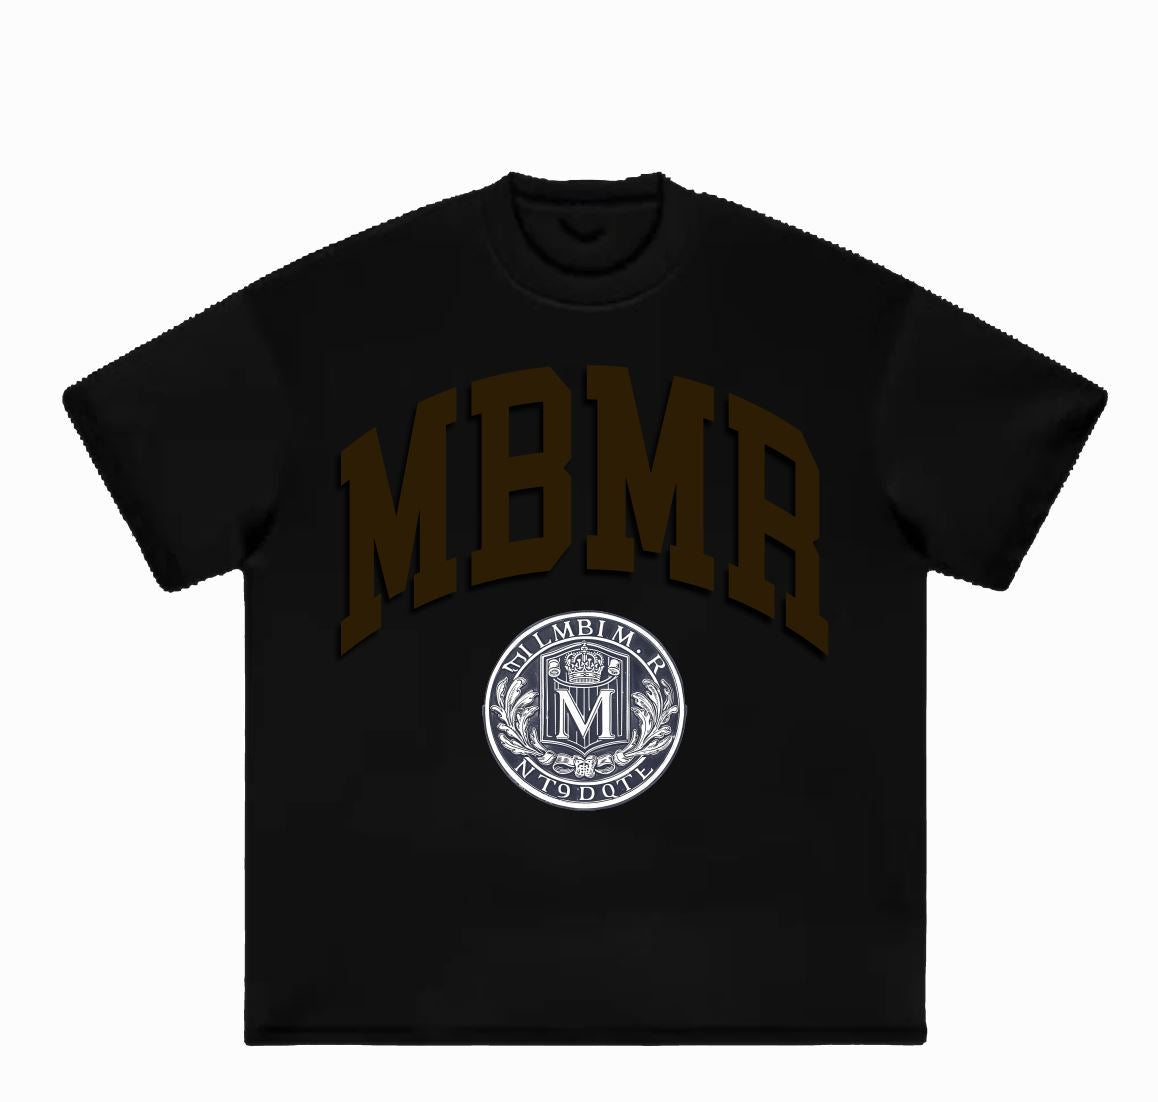 Made by Mr. Reed Mbmr Logo Tee - Black/Brown Medium